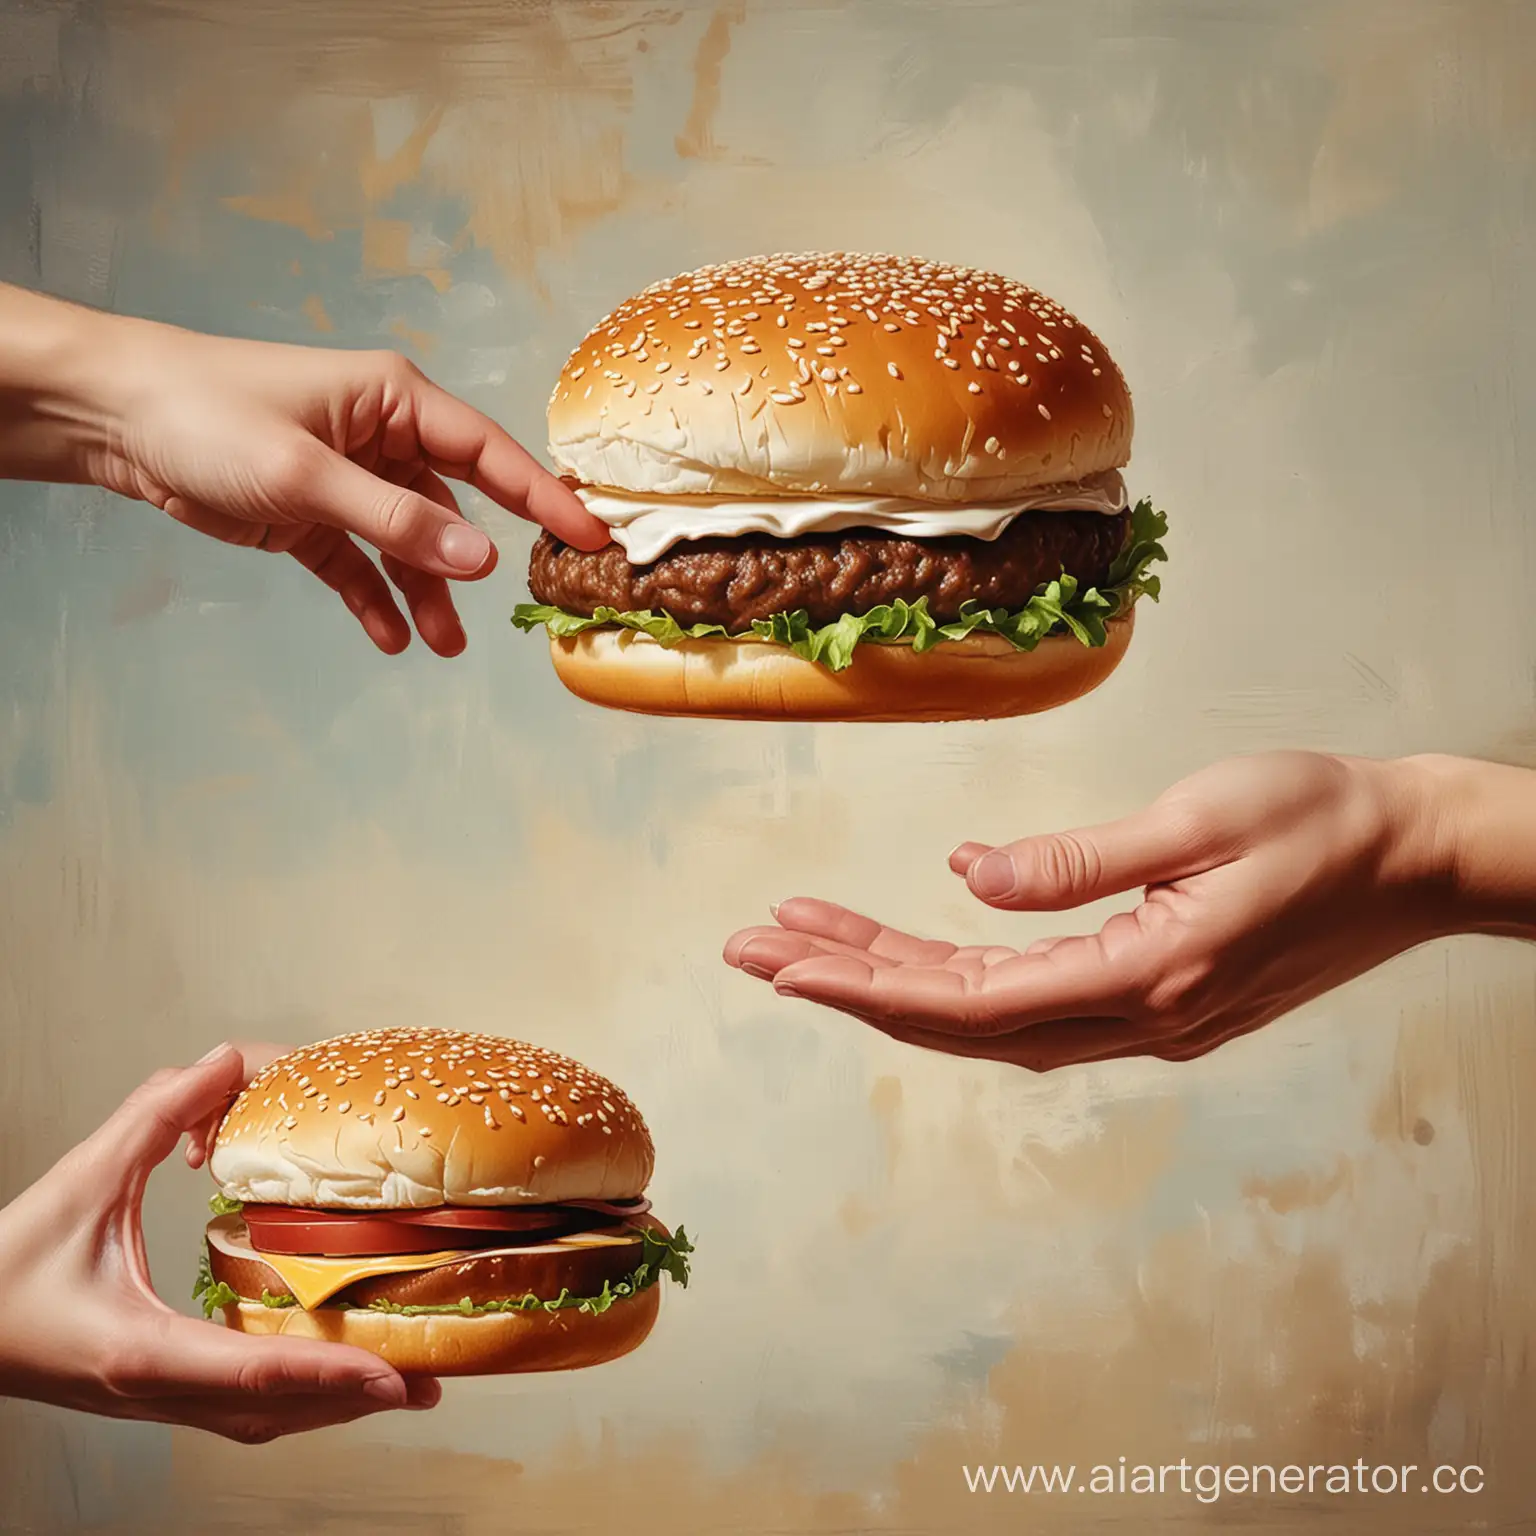 Divine-Hands-Holding-Burger-Modern-Interpretation-of-Creation-of-Adam